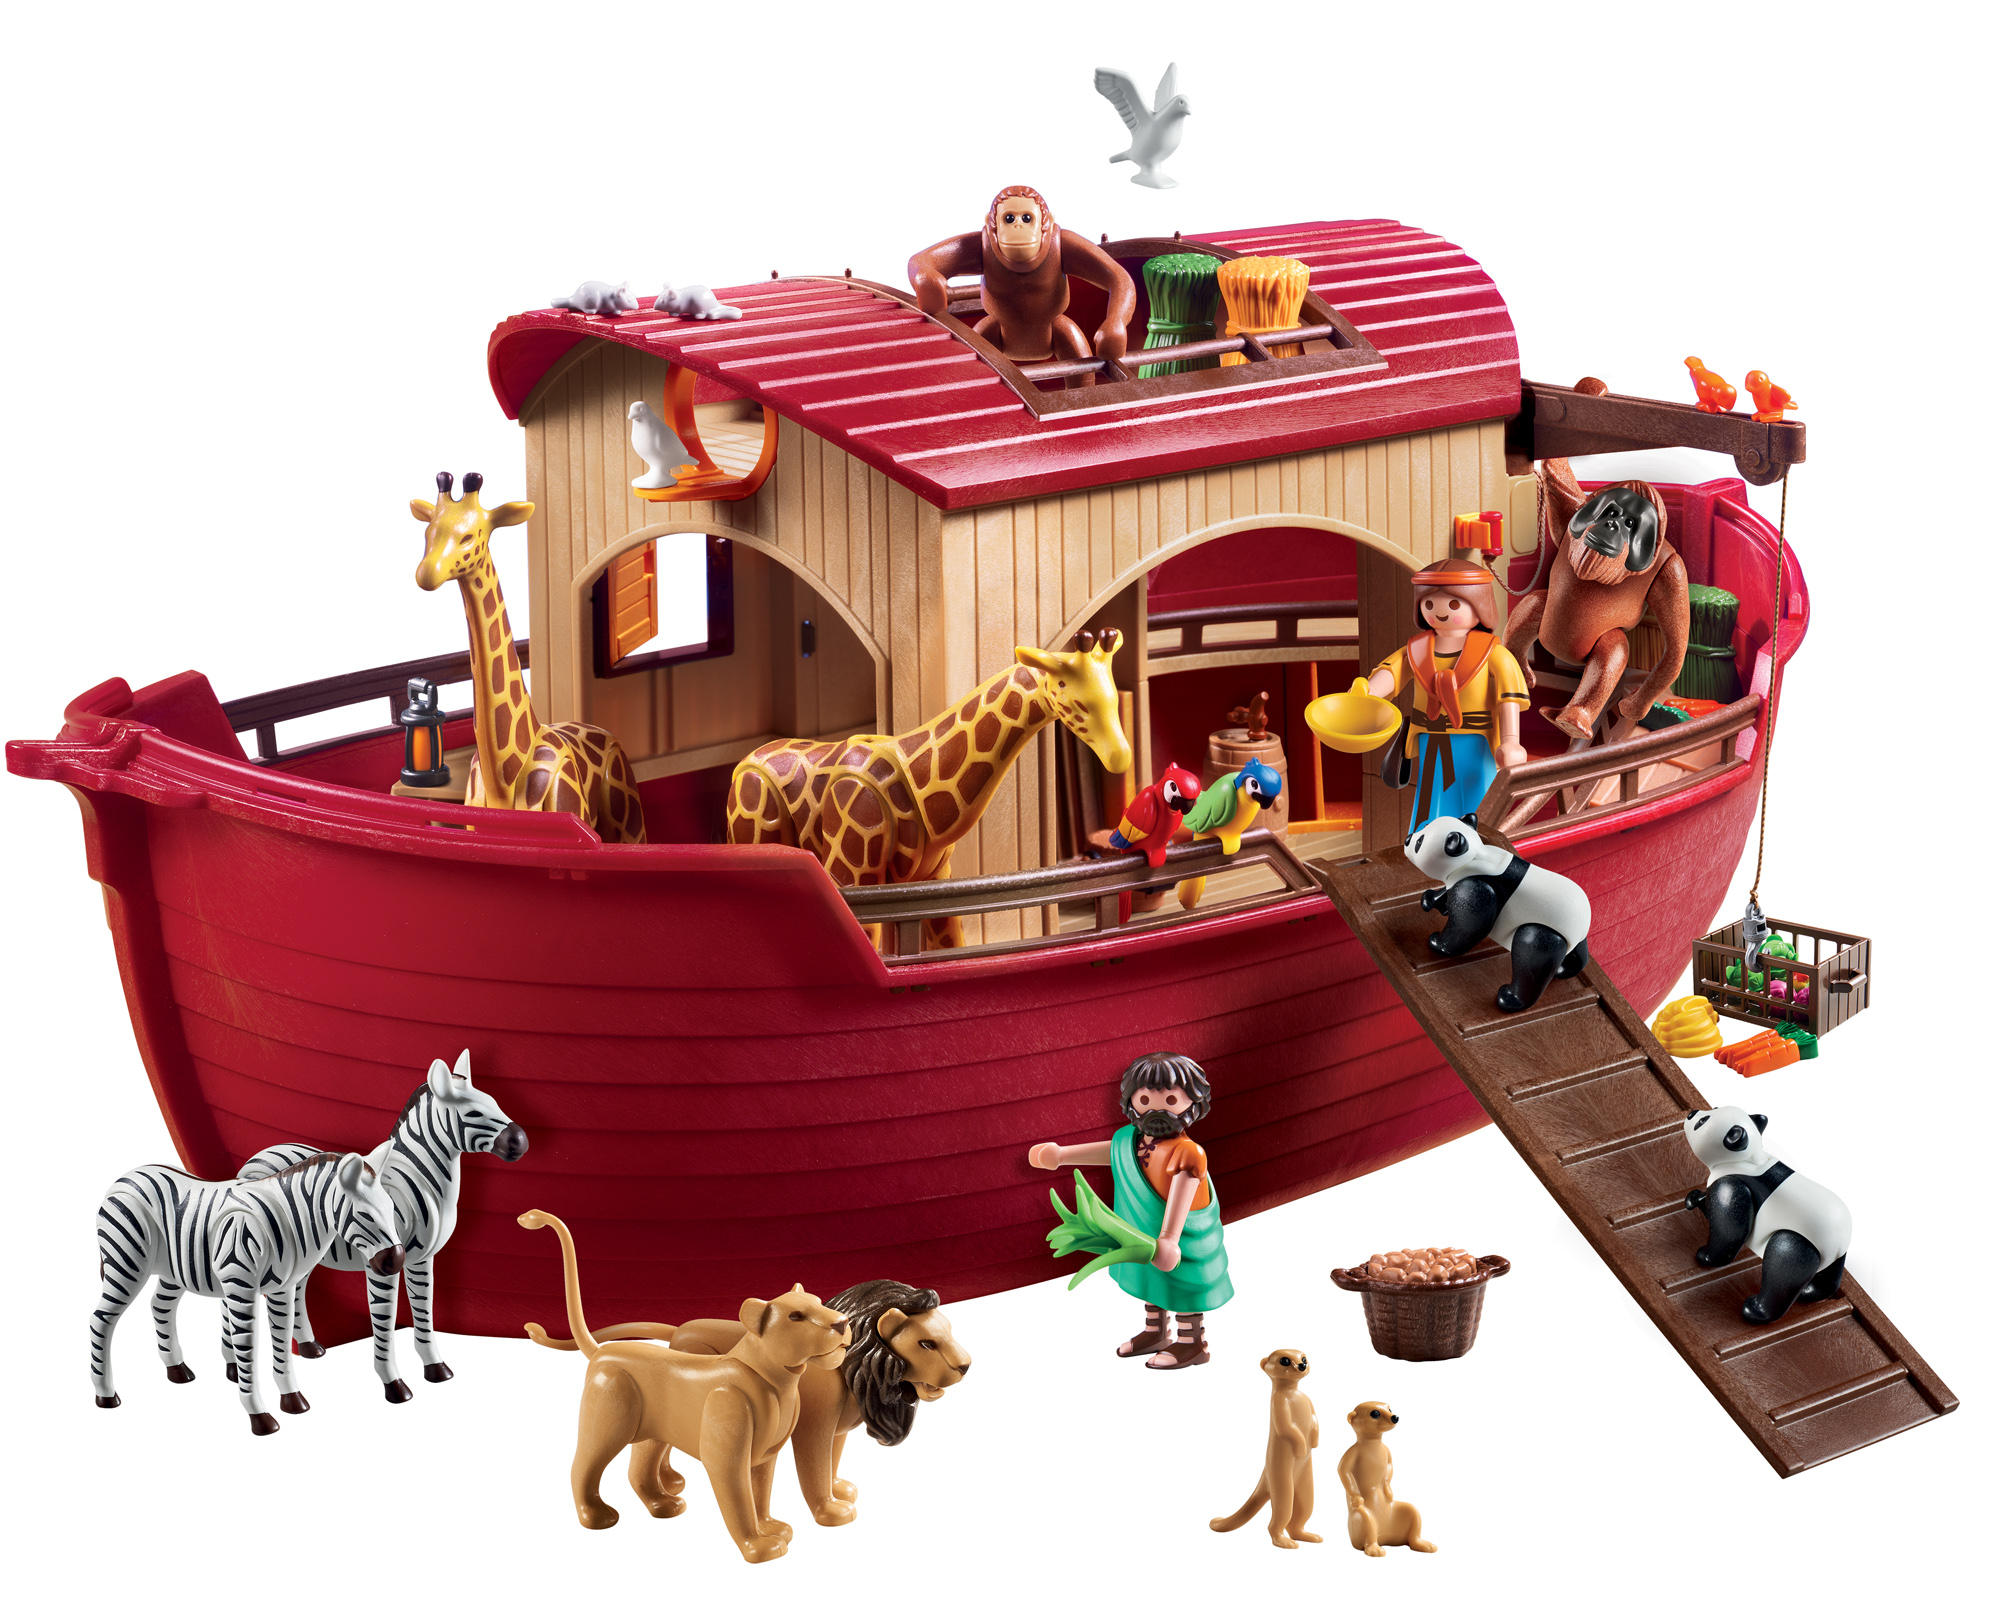 PLAYMOBIL Noah's Ark - image 1 of 6